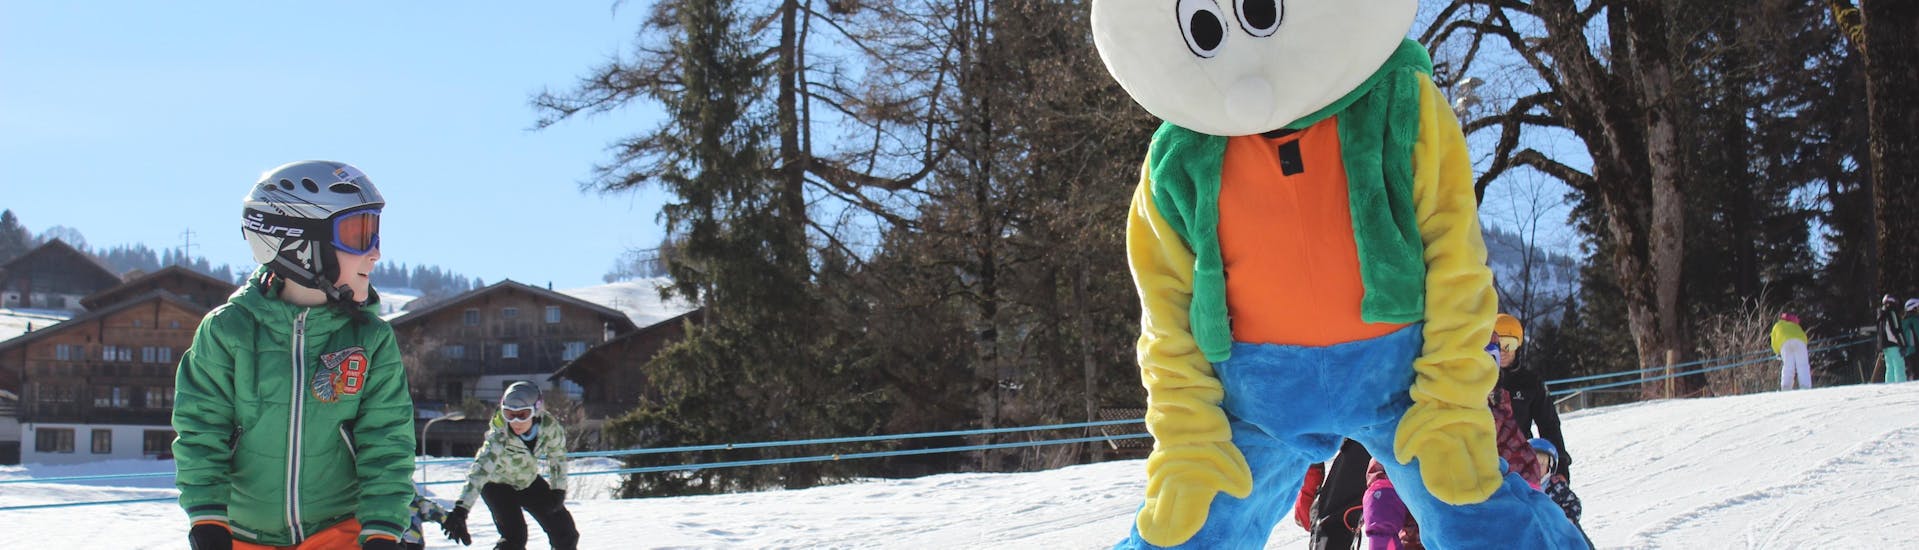 The mascot of Swiss Ski School Zweisimmen helps little children to learn how to ski in plough.